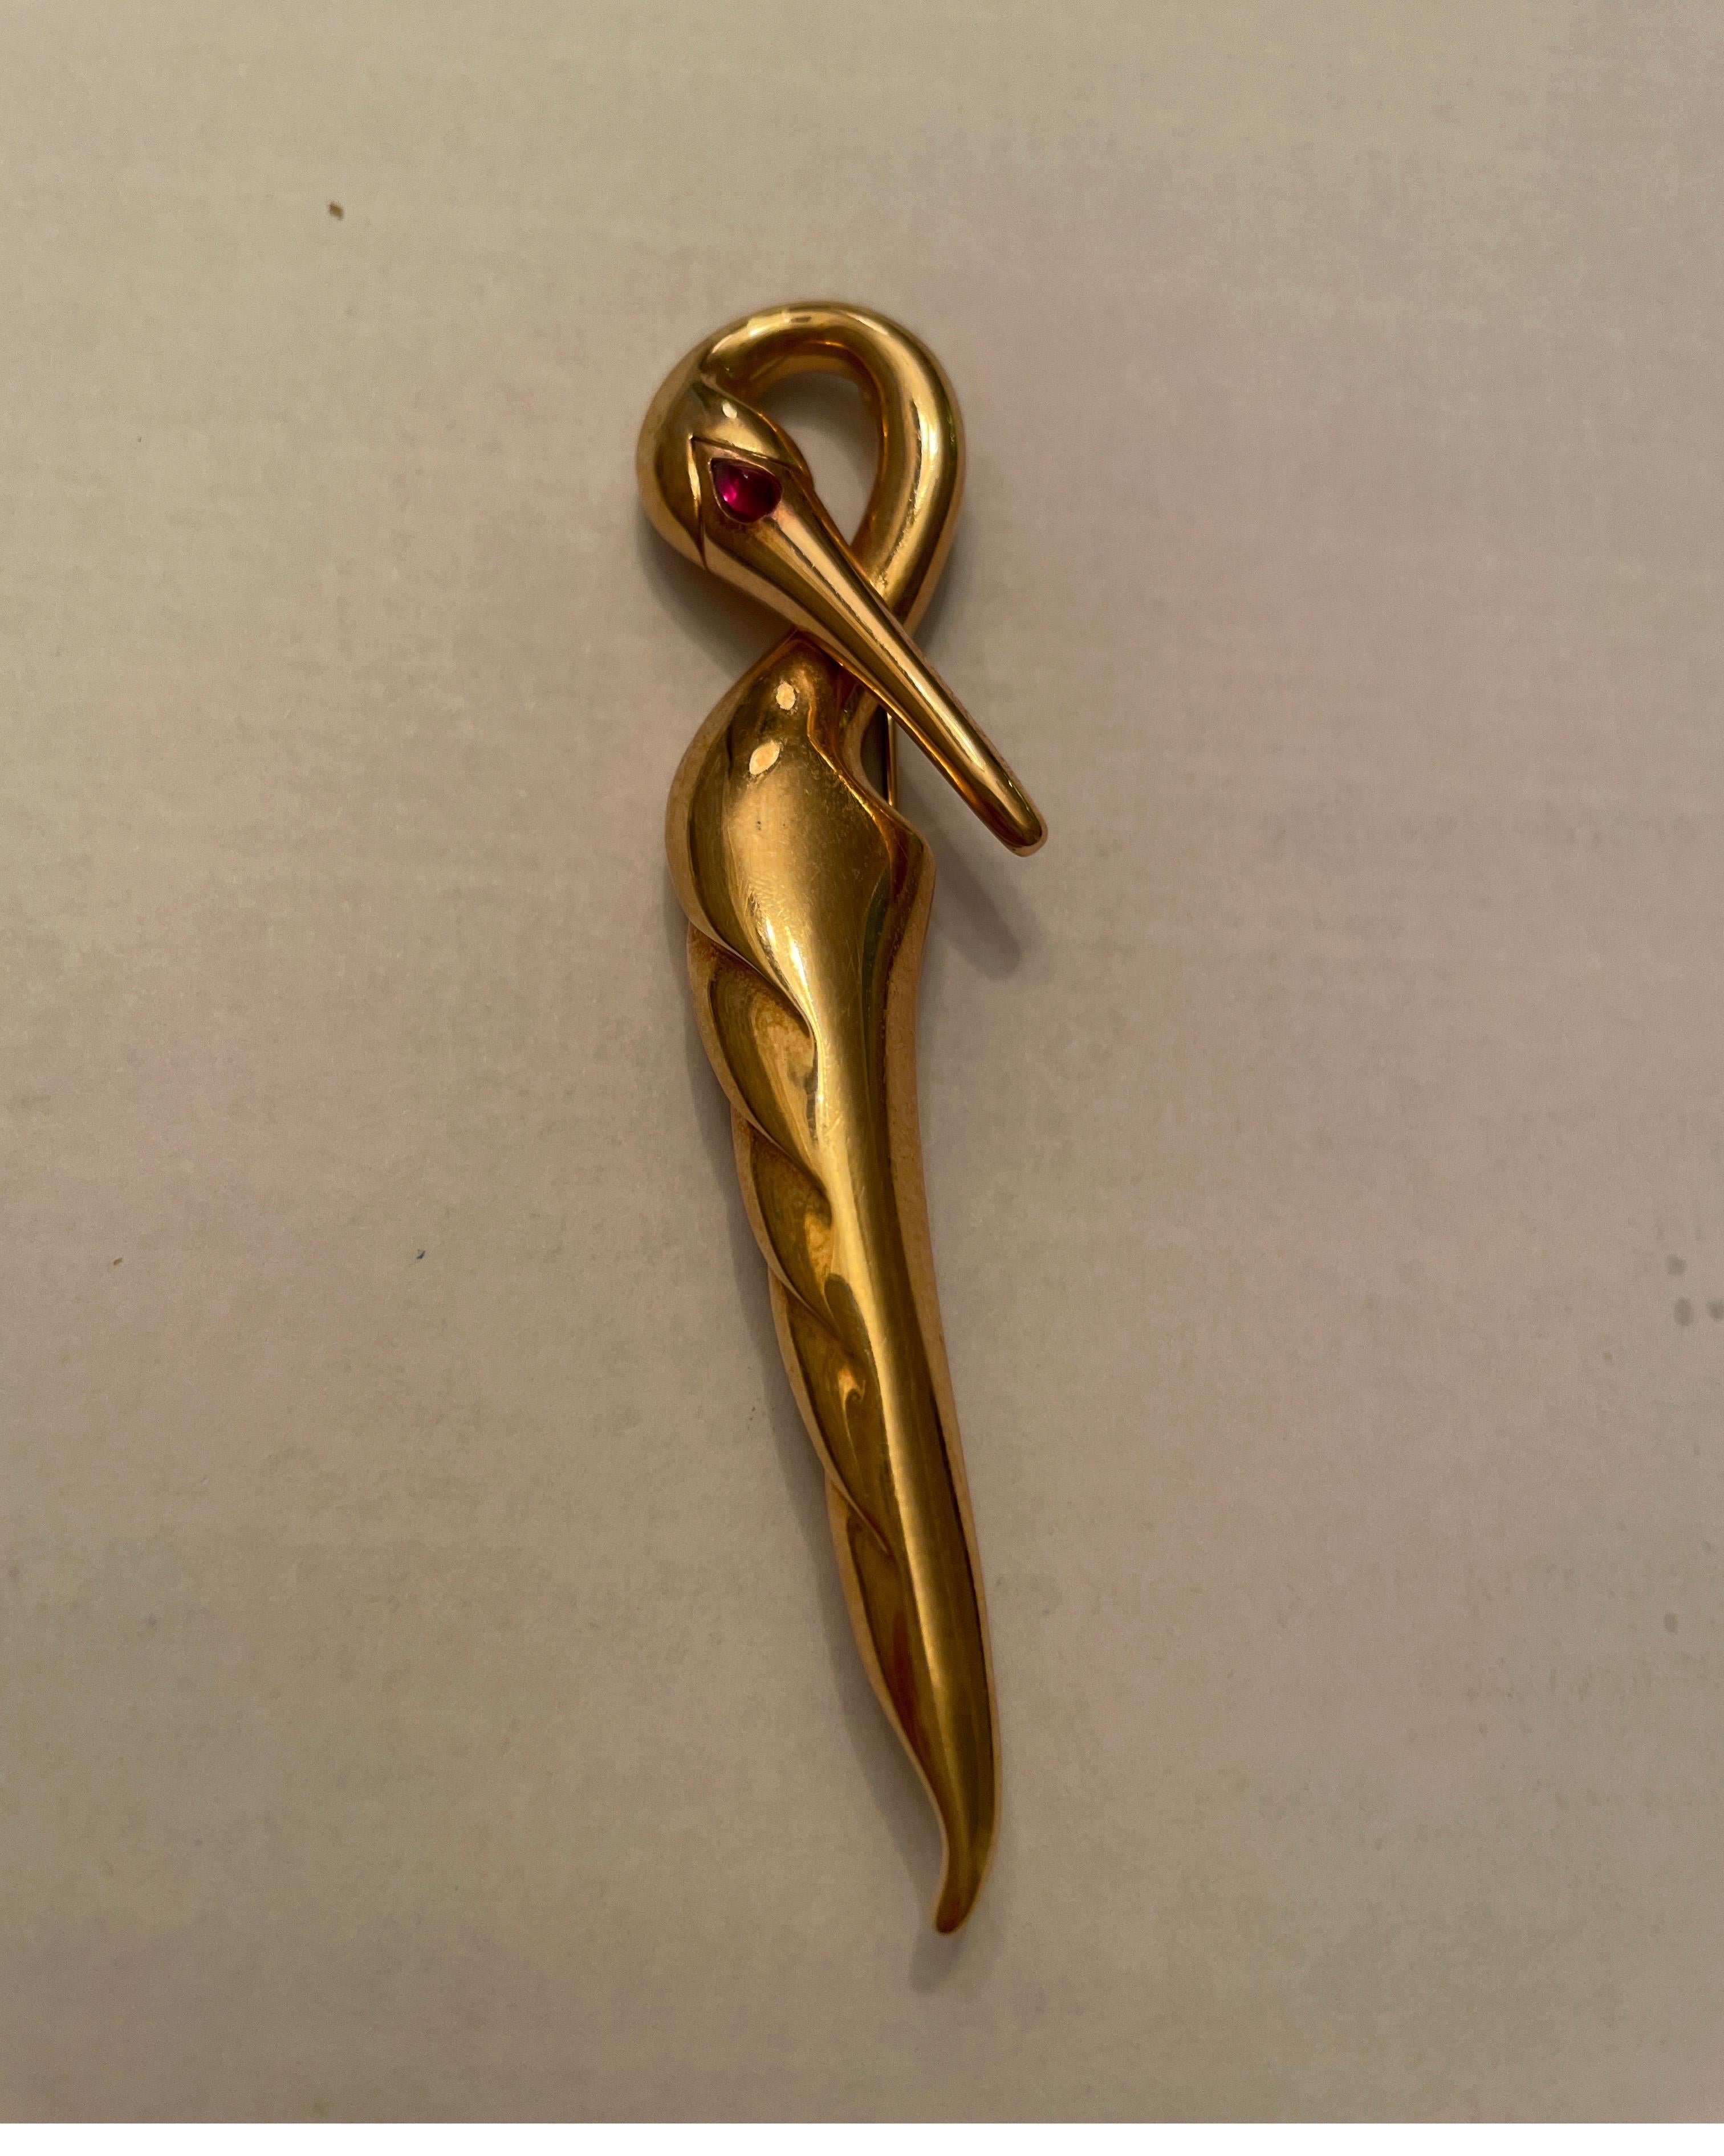 Michael Bondanza 18K yellow gold swan pin with pear shape cabochon  ruby eye. 
Last retail $3250